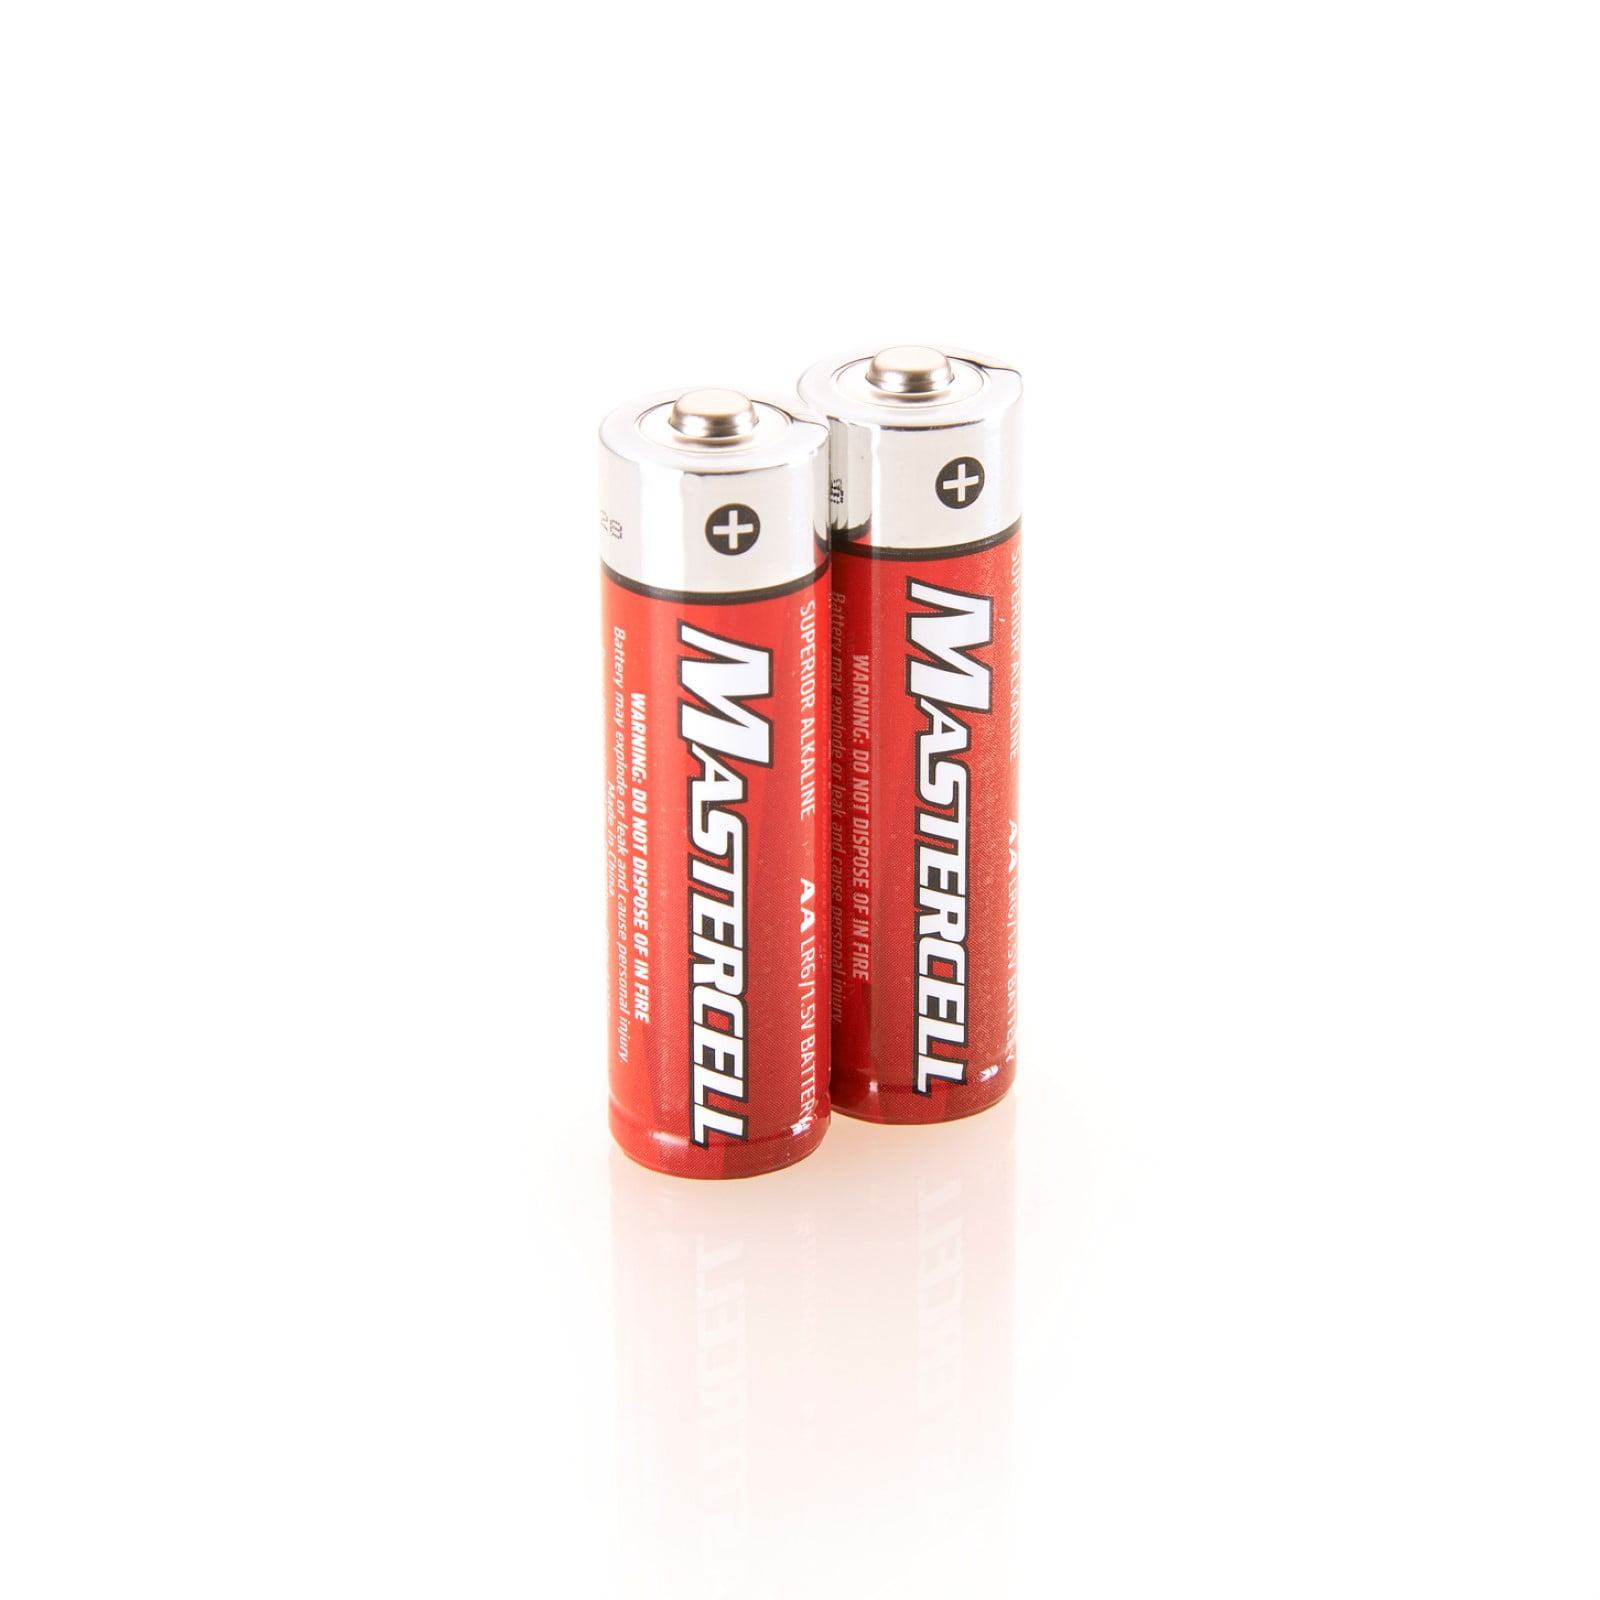 Dorcy Mastercell Long-Lasting Alkaline Manganese Battery, 2-Pack -